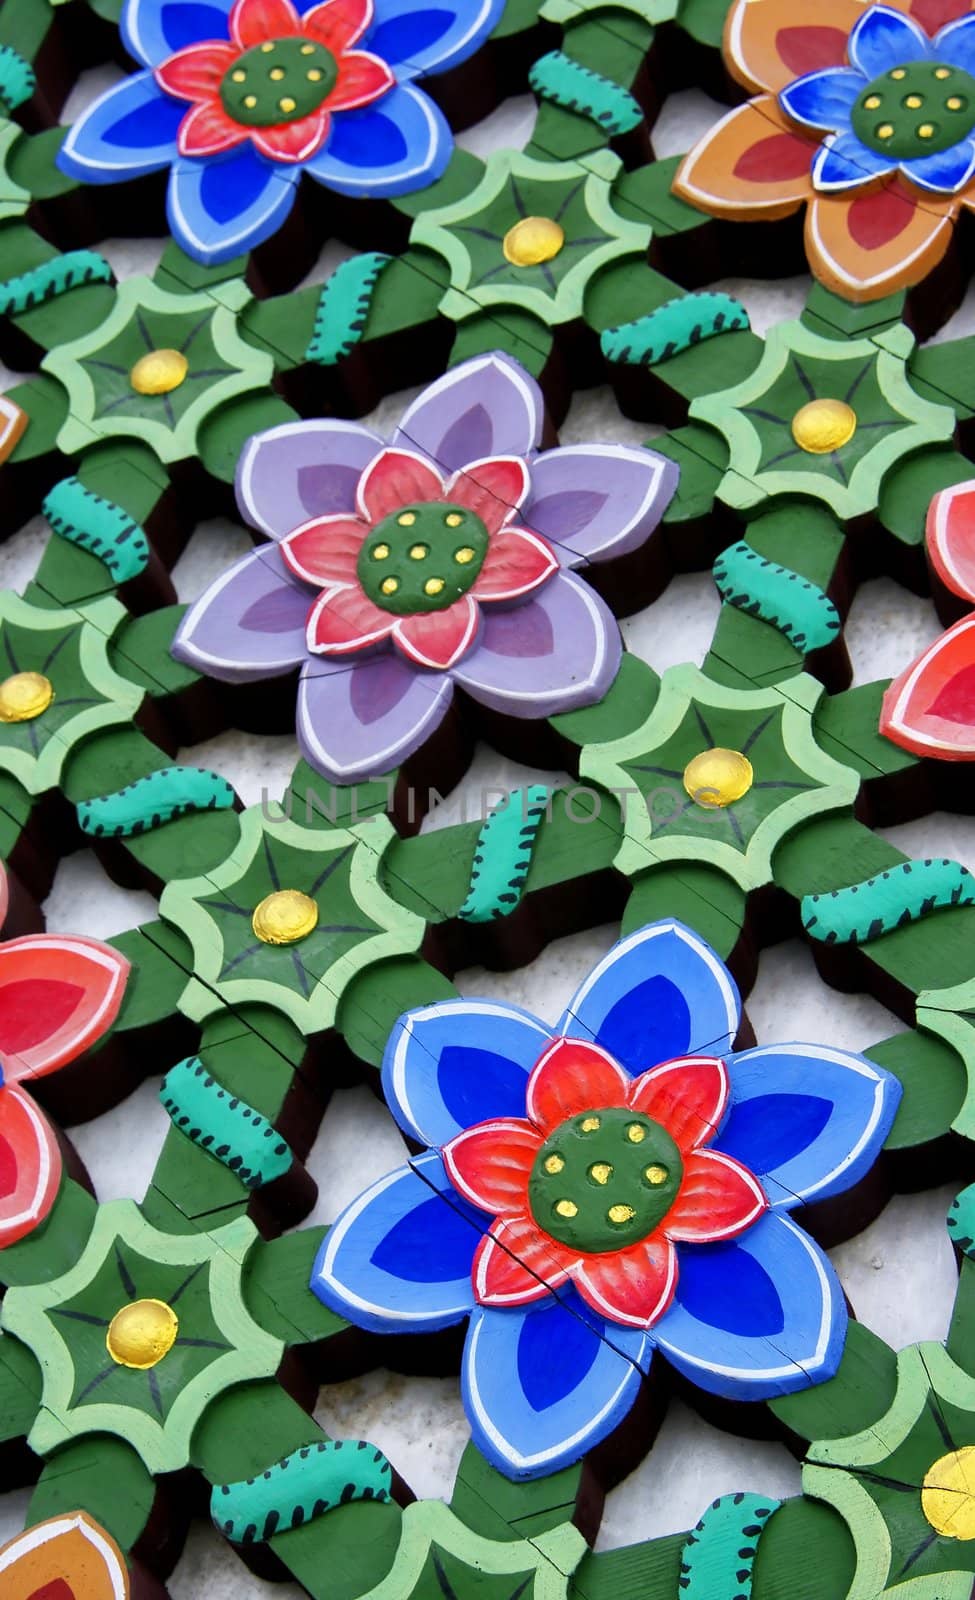 Lattice Panel Flowers by clickbeetle